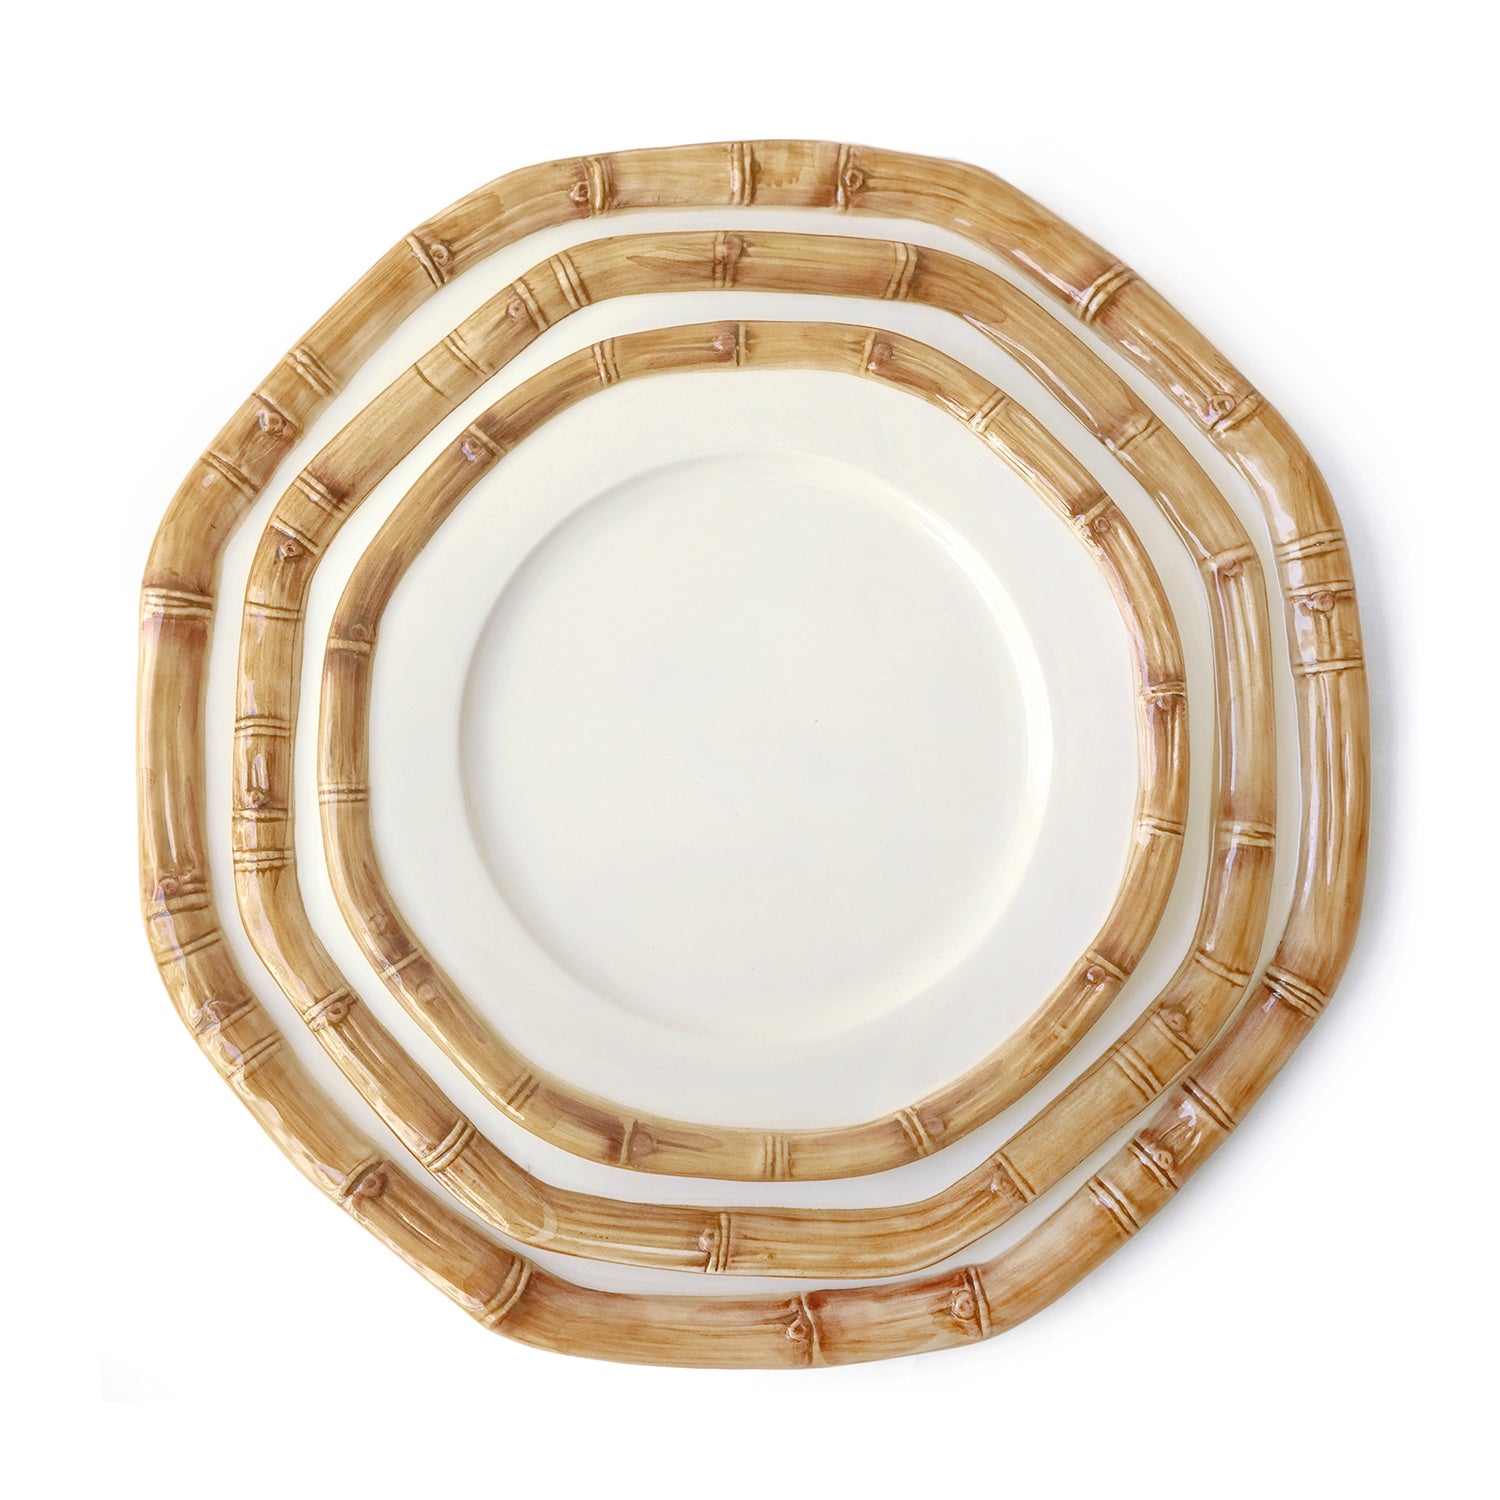 Bamboo Dinner Plates (Set of 4)